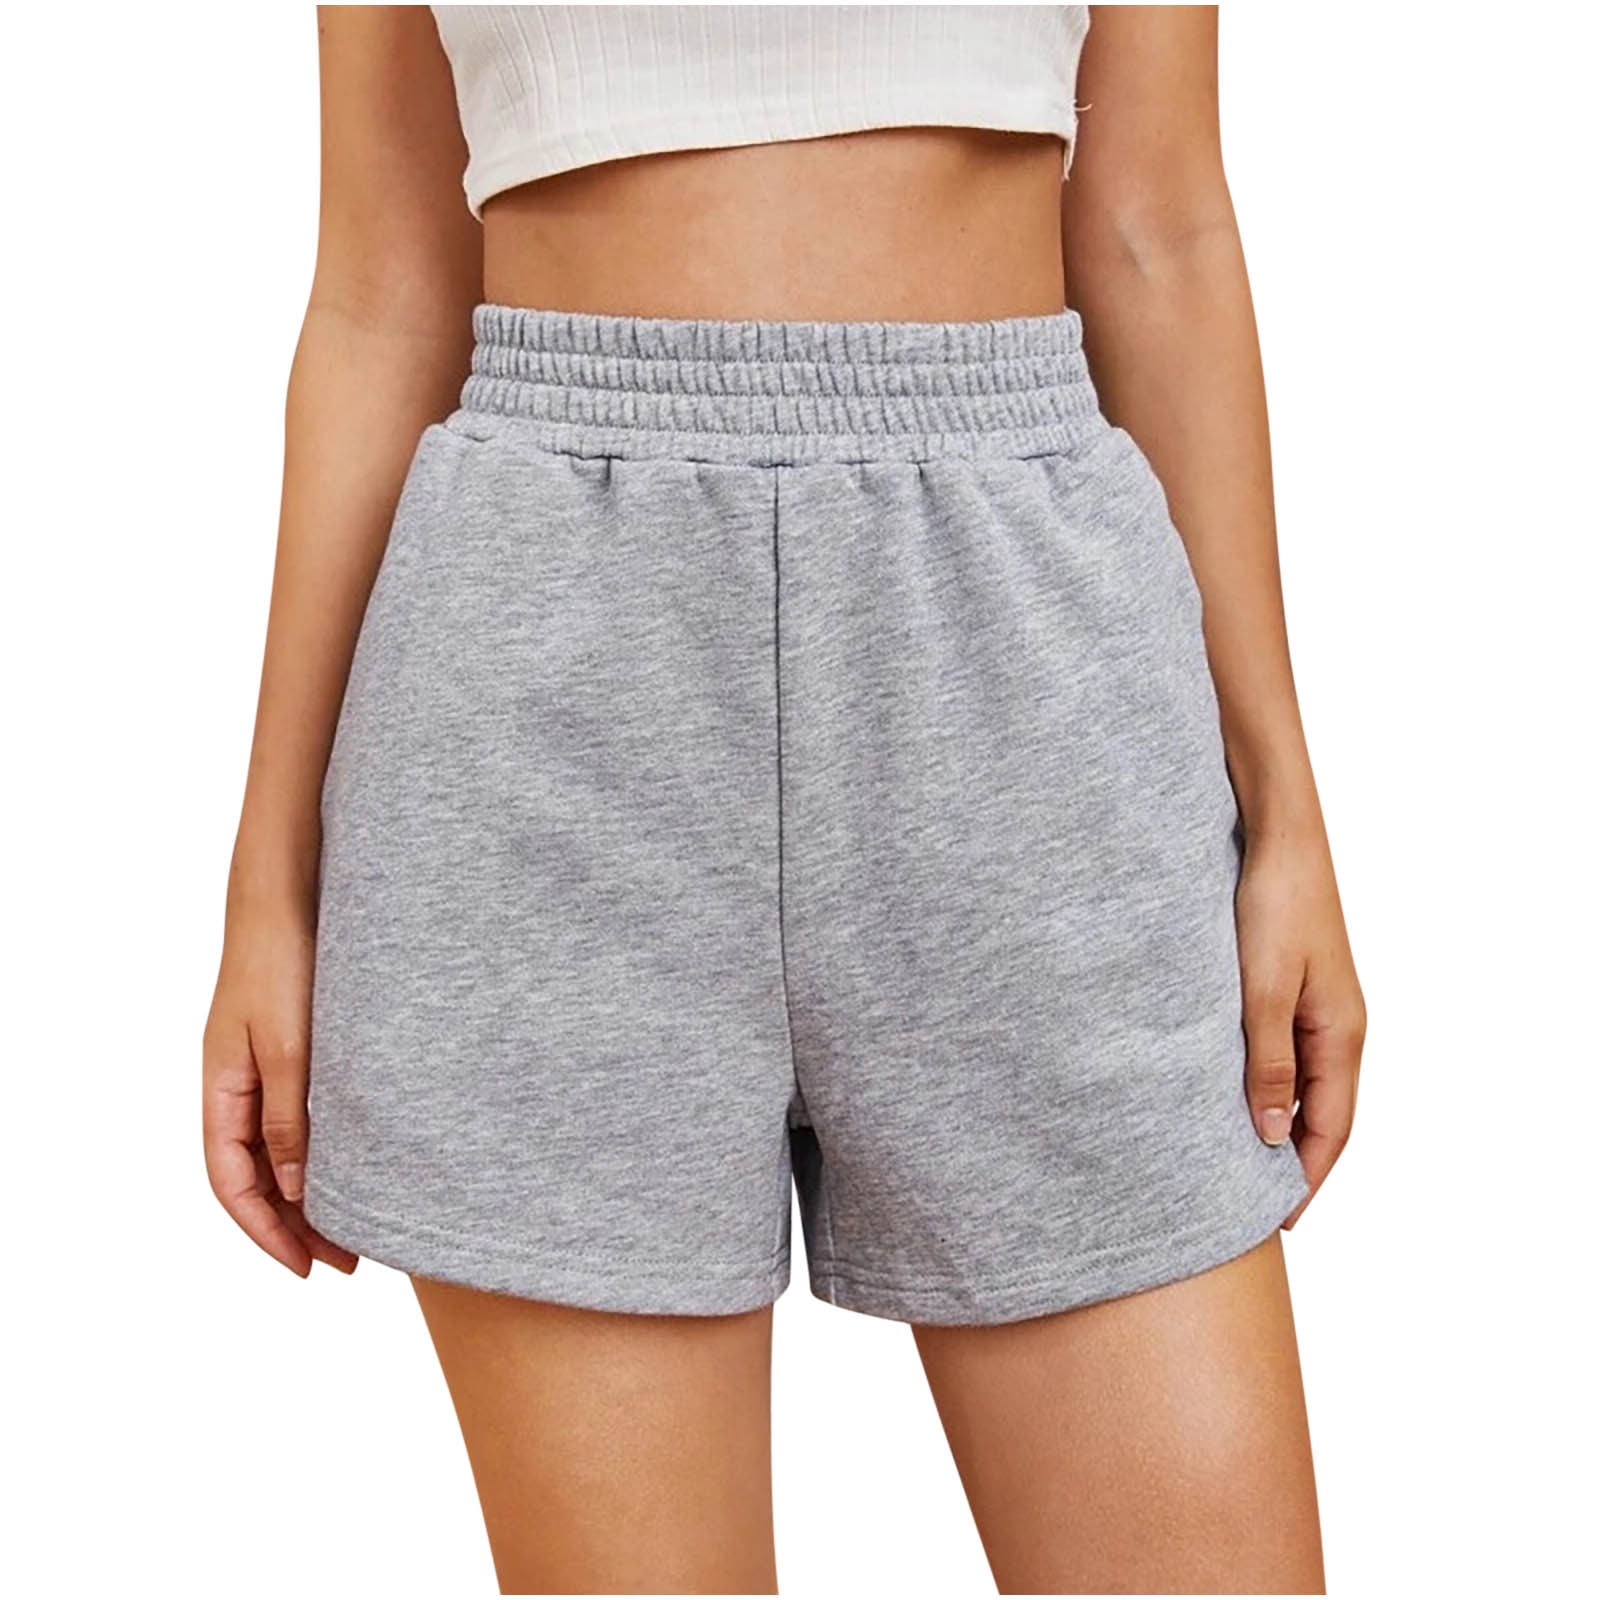 Samickarr Summer Savings Clearance!Sweat Shorts For Women High